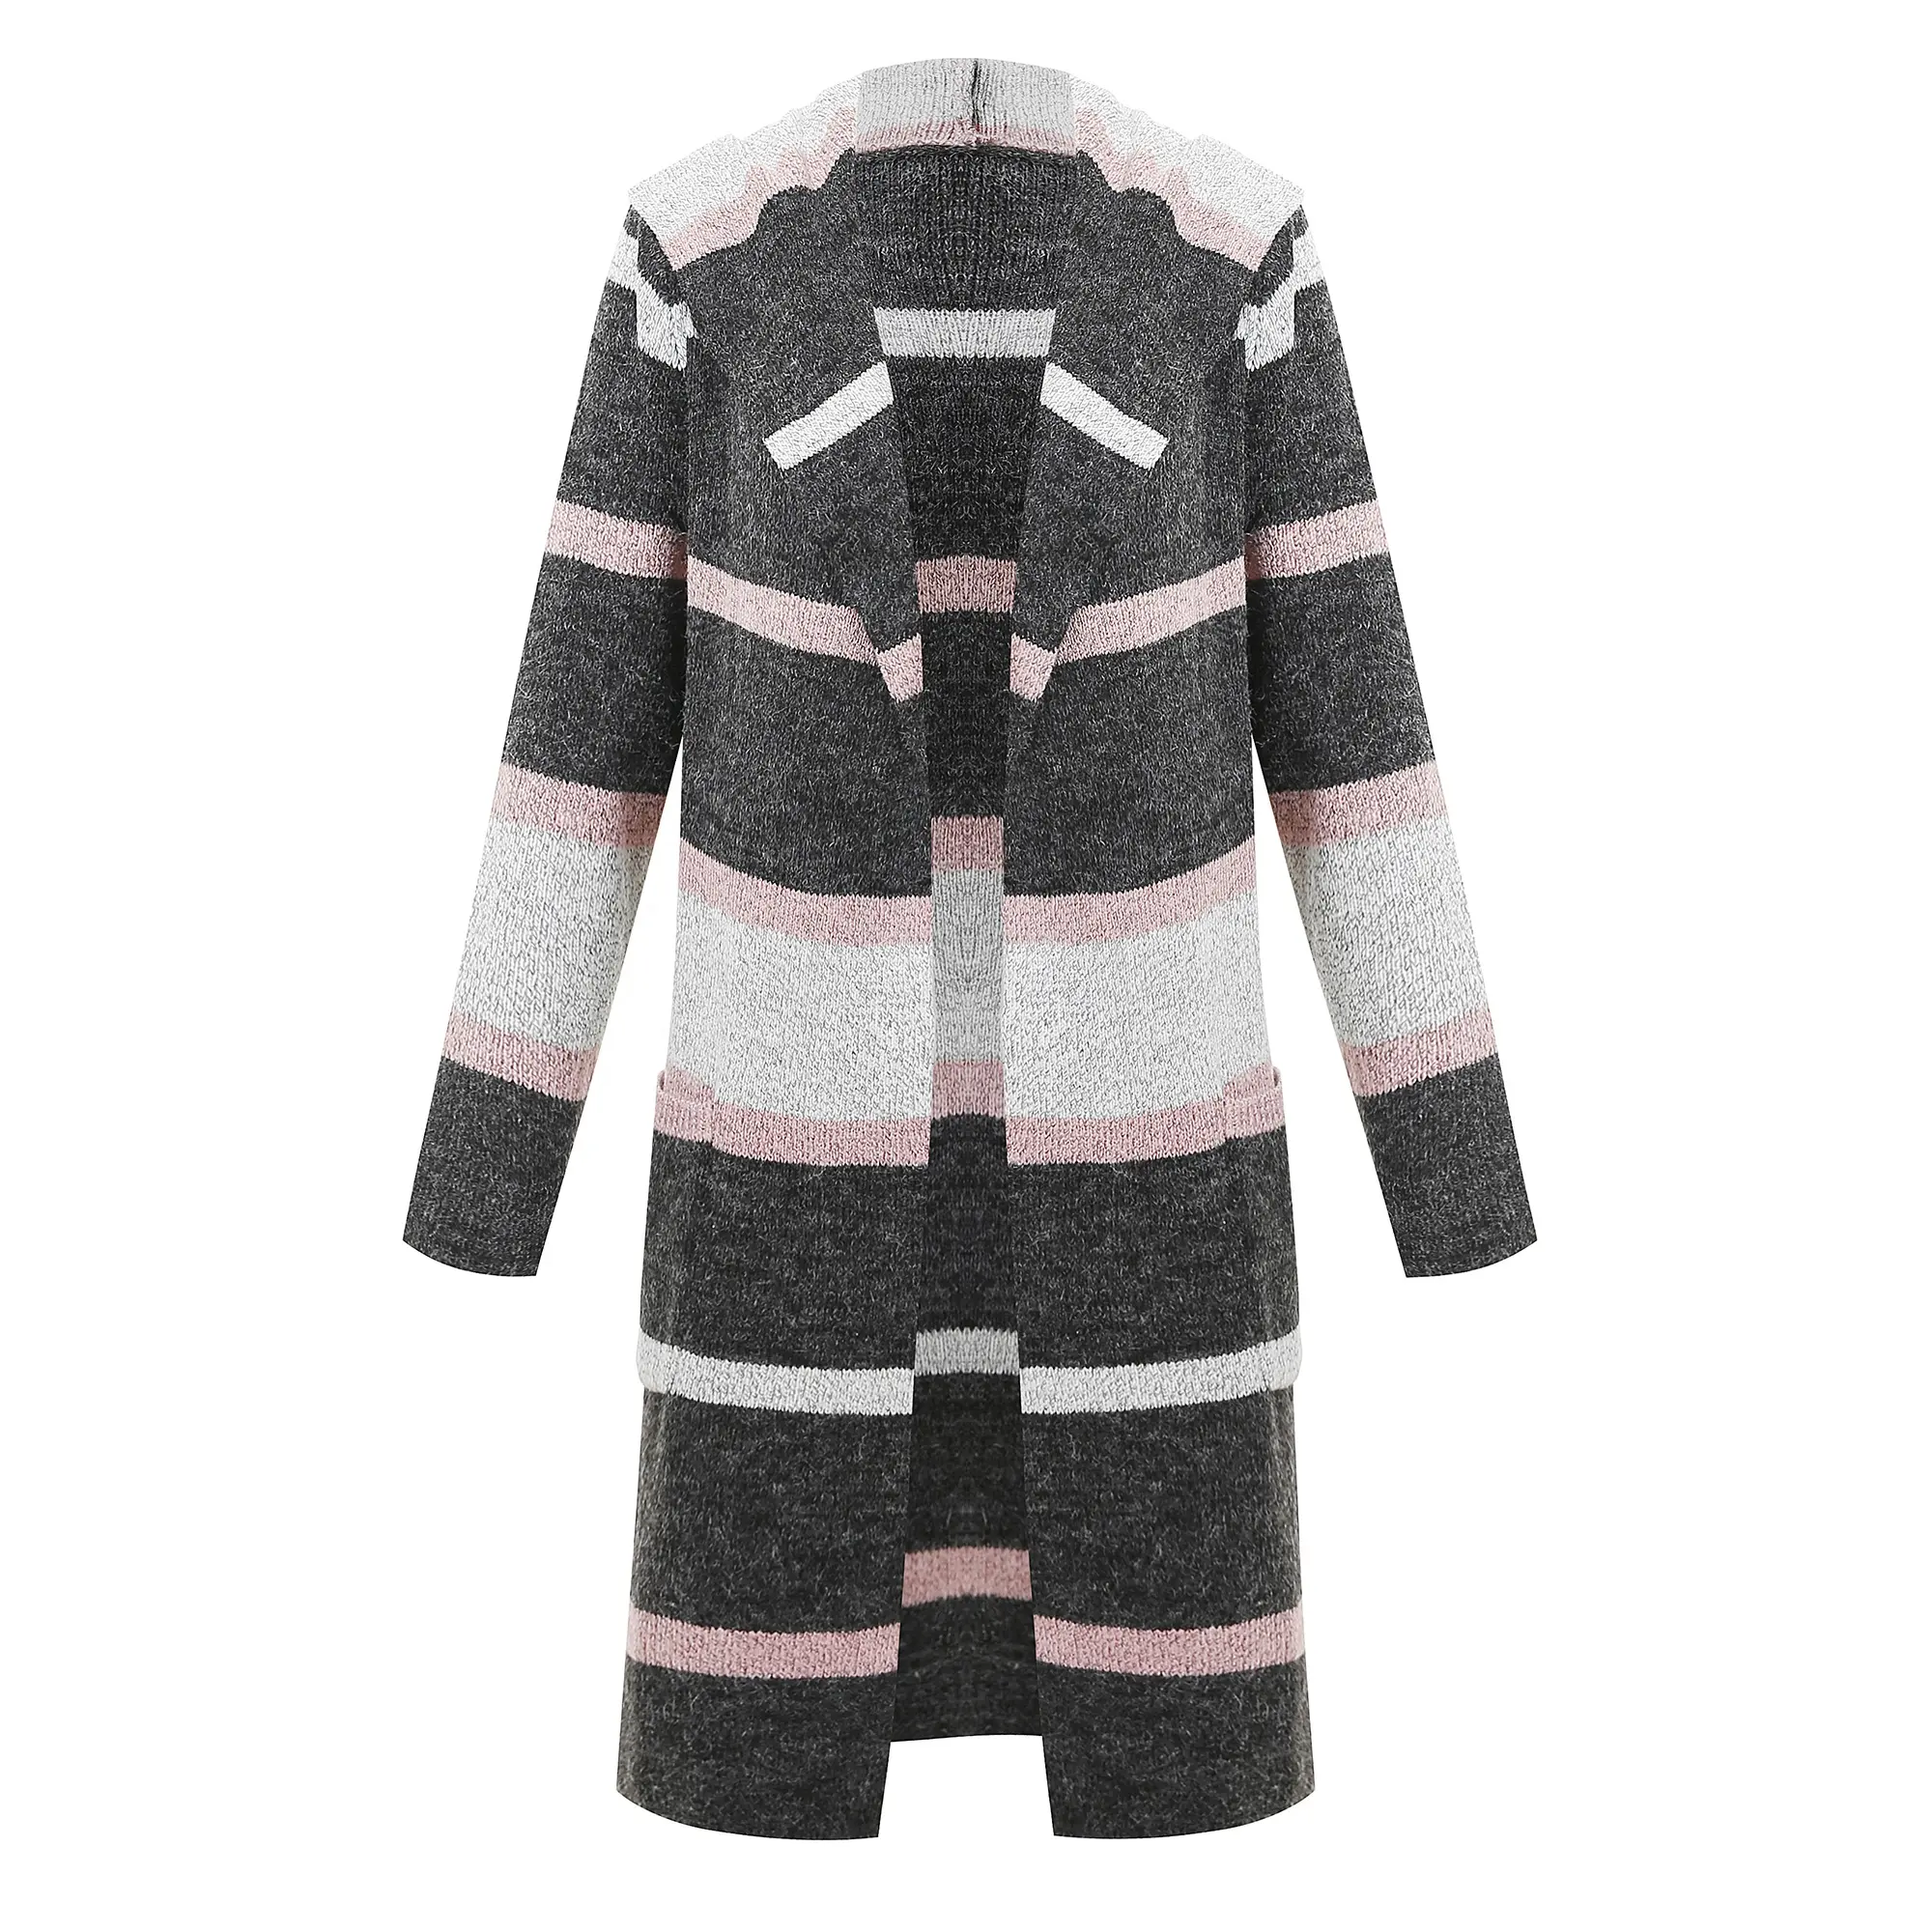 Plus size Winter Fashion Women's Long Sleeve Knit Open Coat Multicolor Striped Lapel Cardigan Sweater women jackets and coats